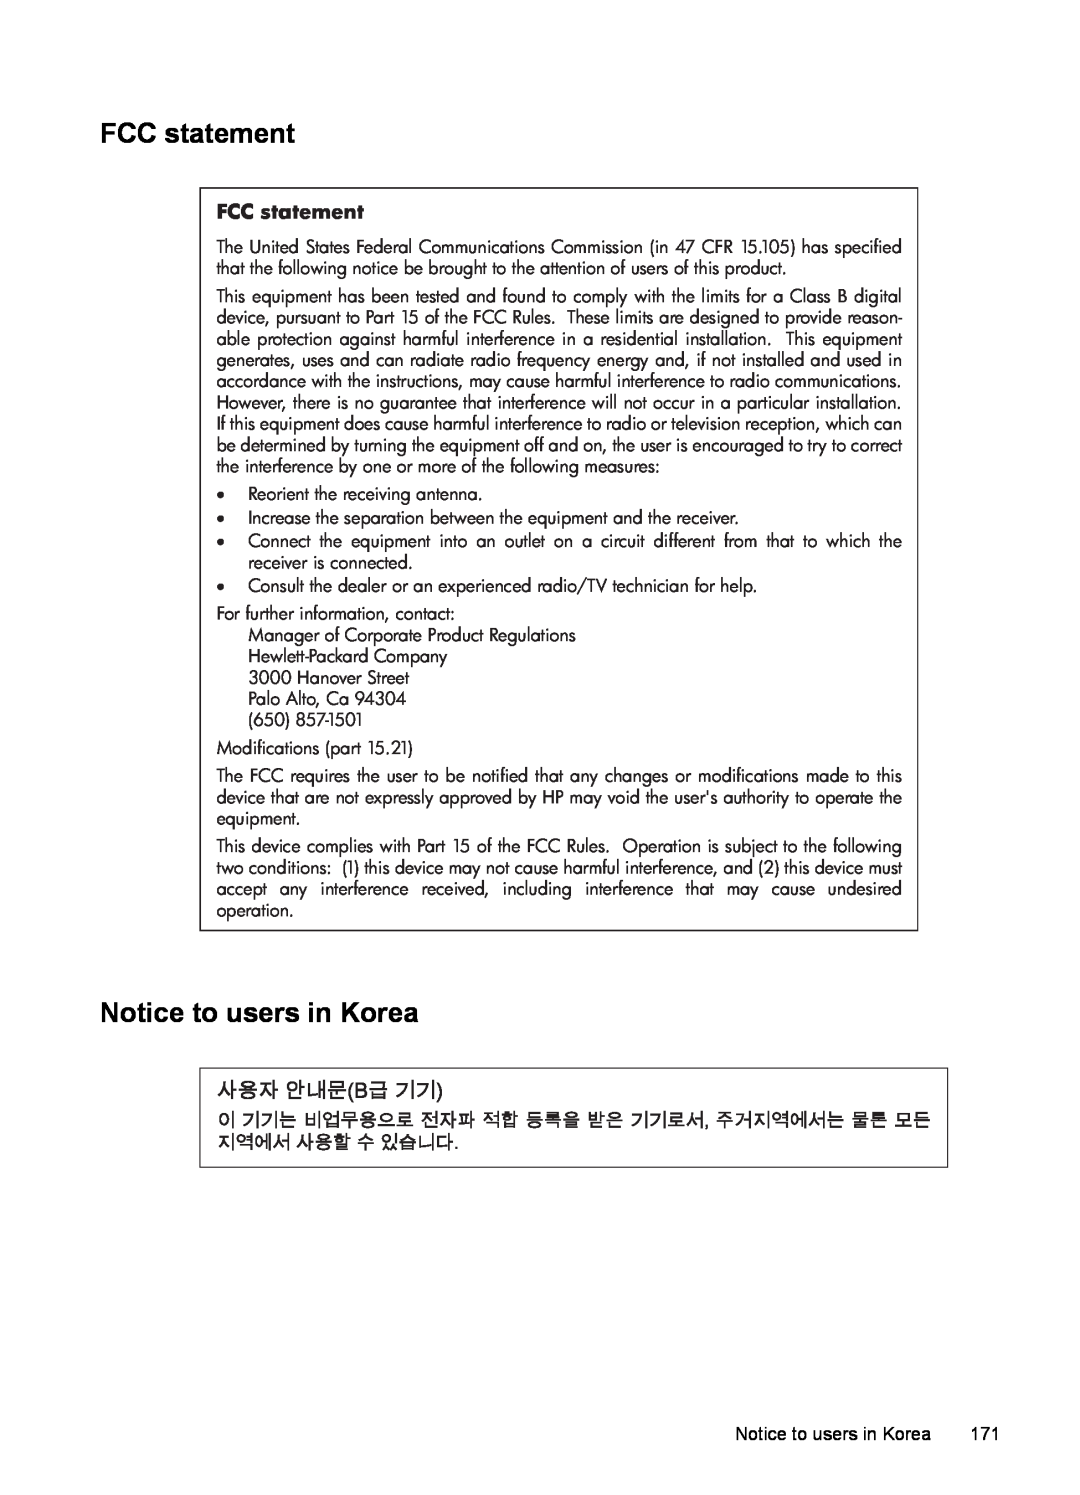 HP J4680, J4660, J4580, J4540, J4550 manual FCC statement, Notice to users in Korea 